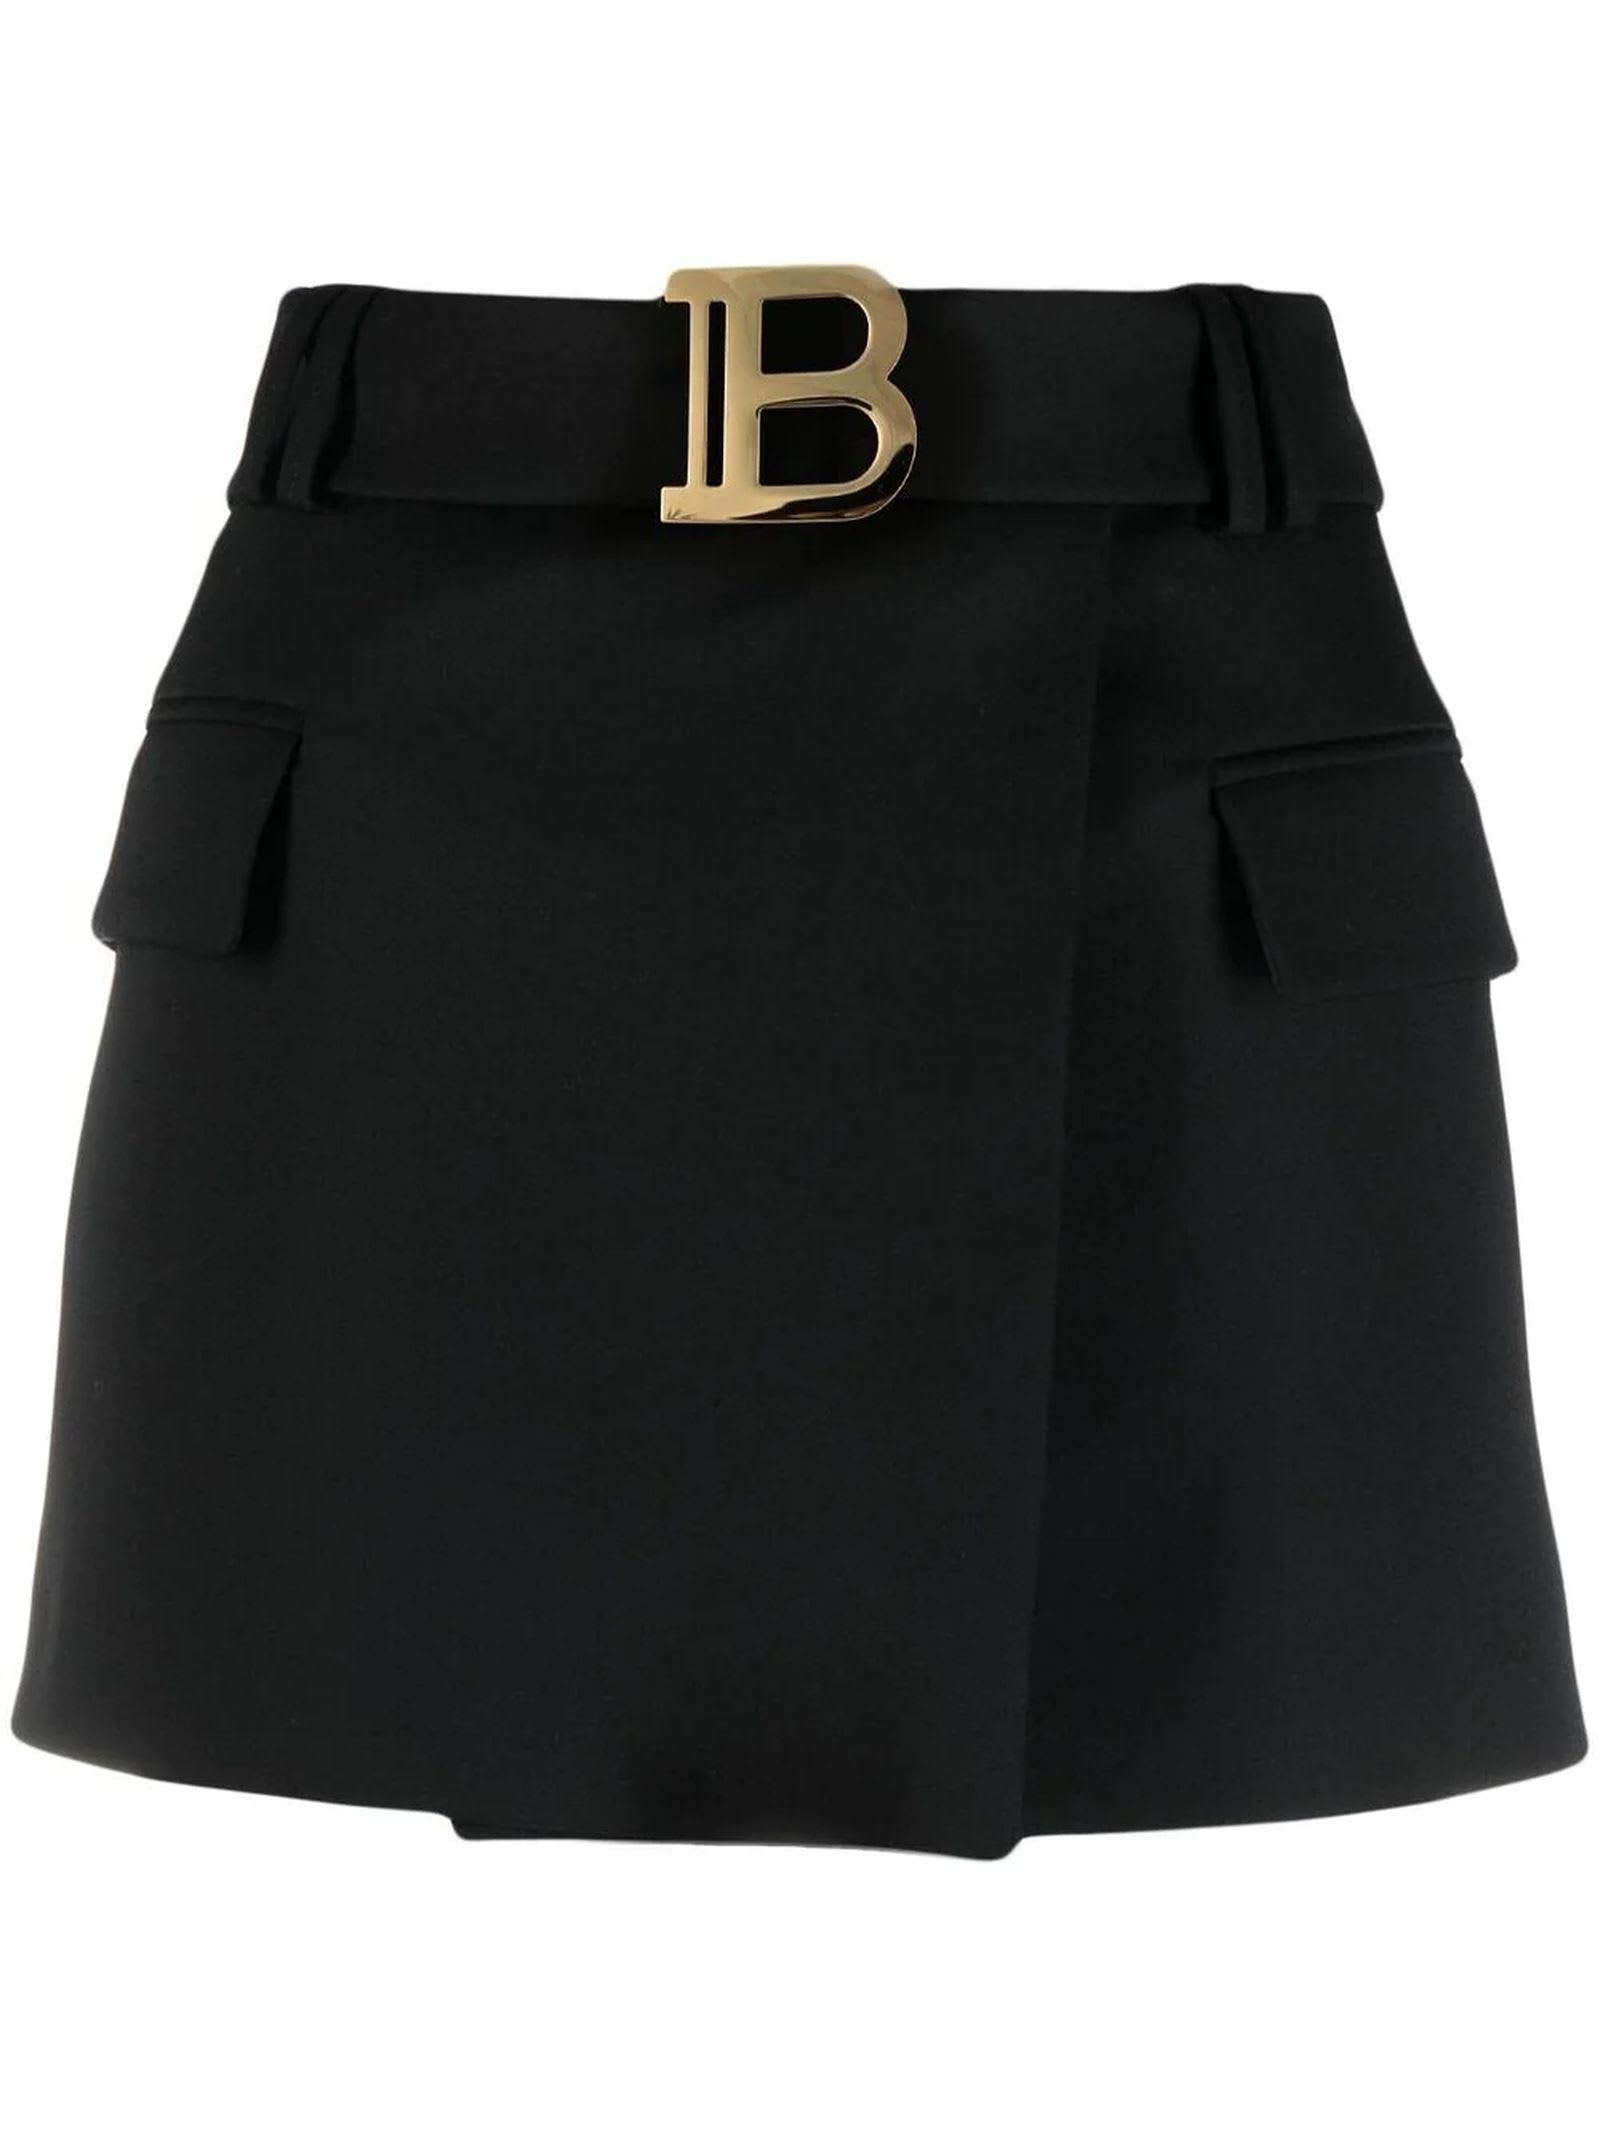 Balmain Short Black Grain De Poudre Fabric Skirt